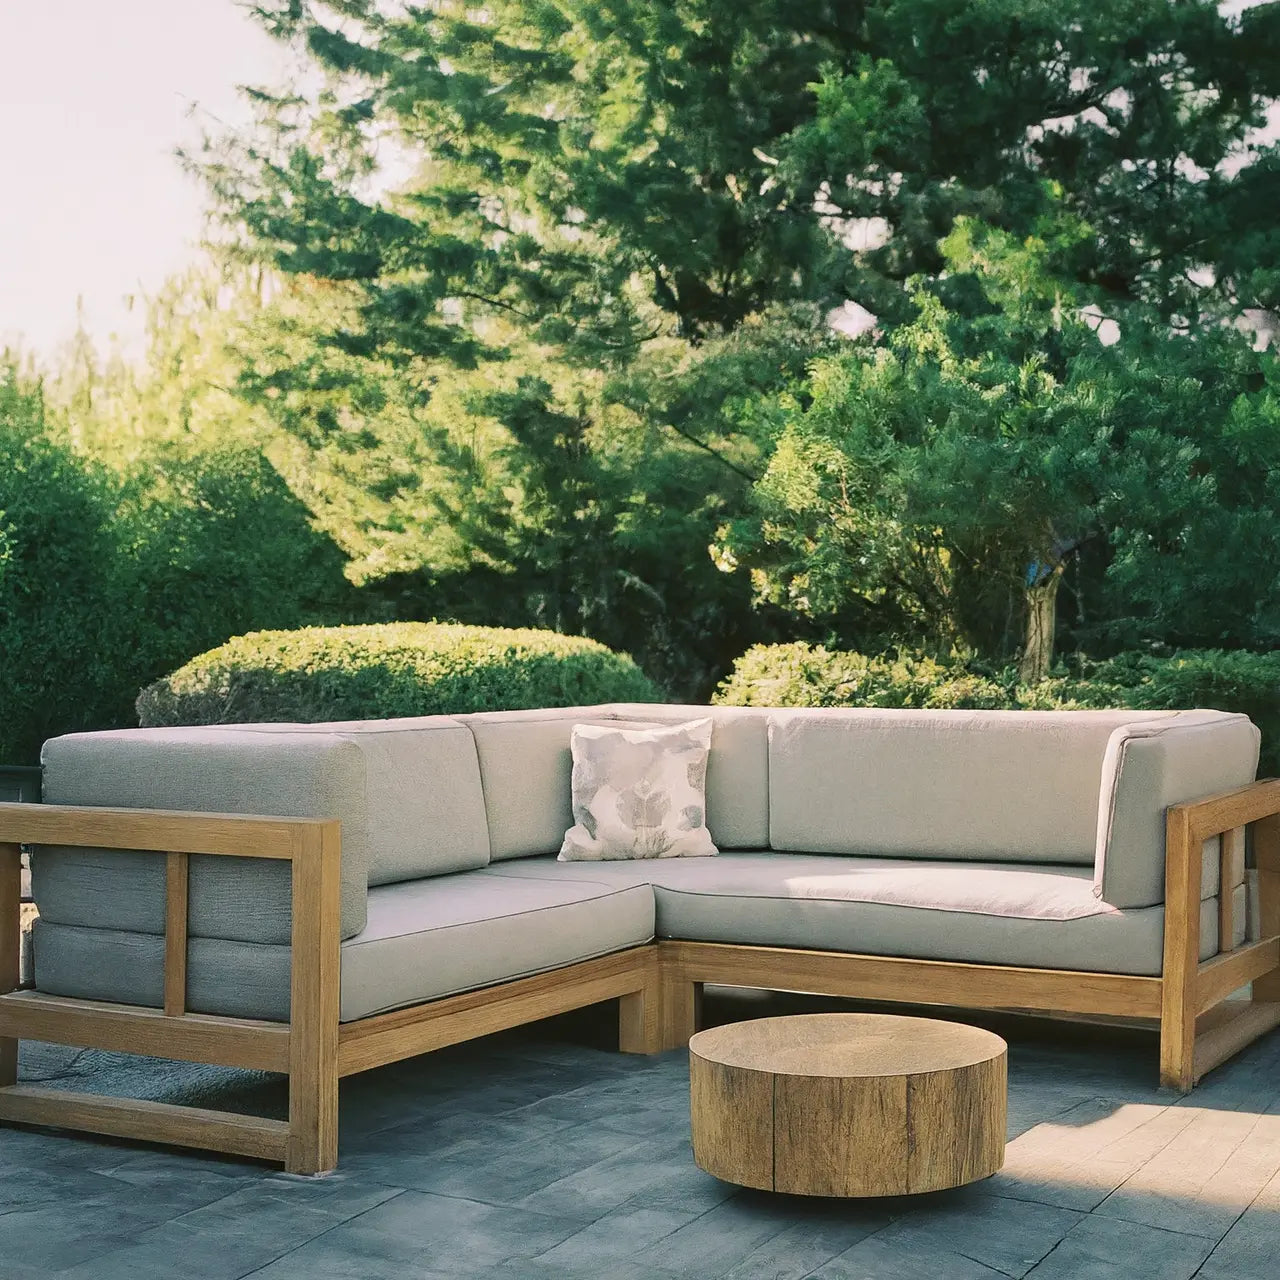 Outdoor Sofas: Creating the Perfect Backyard Getaway